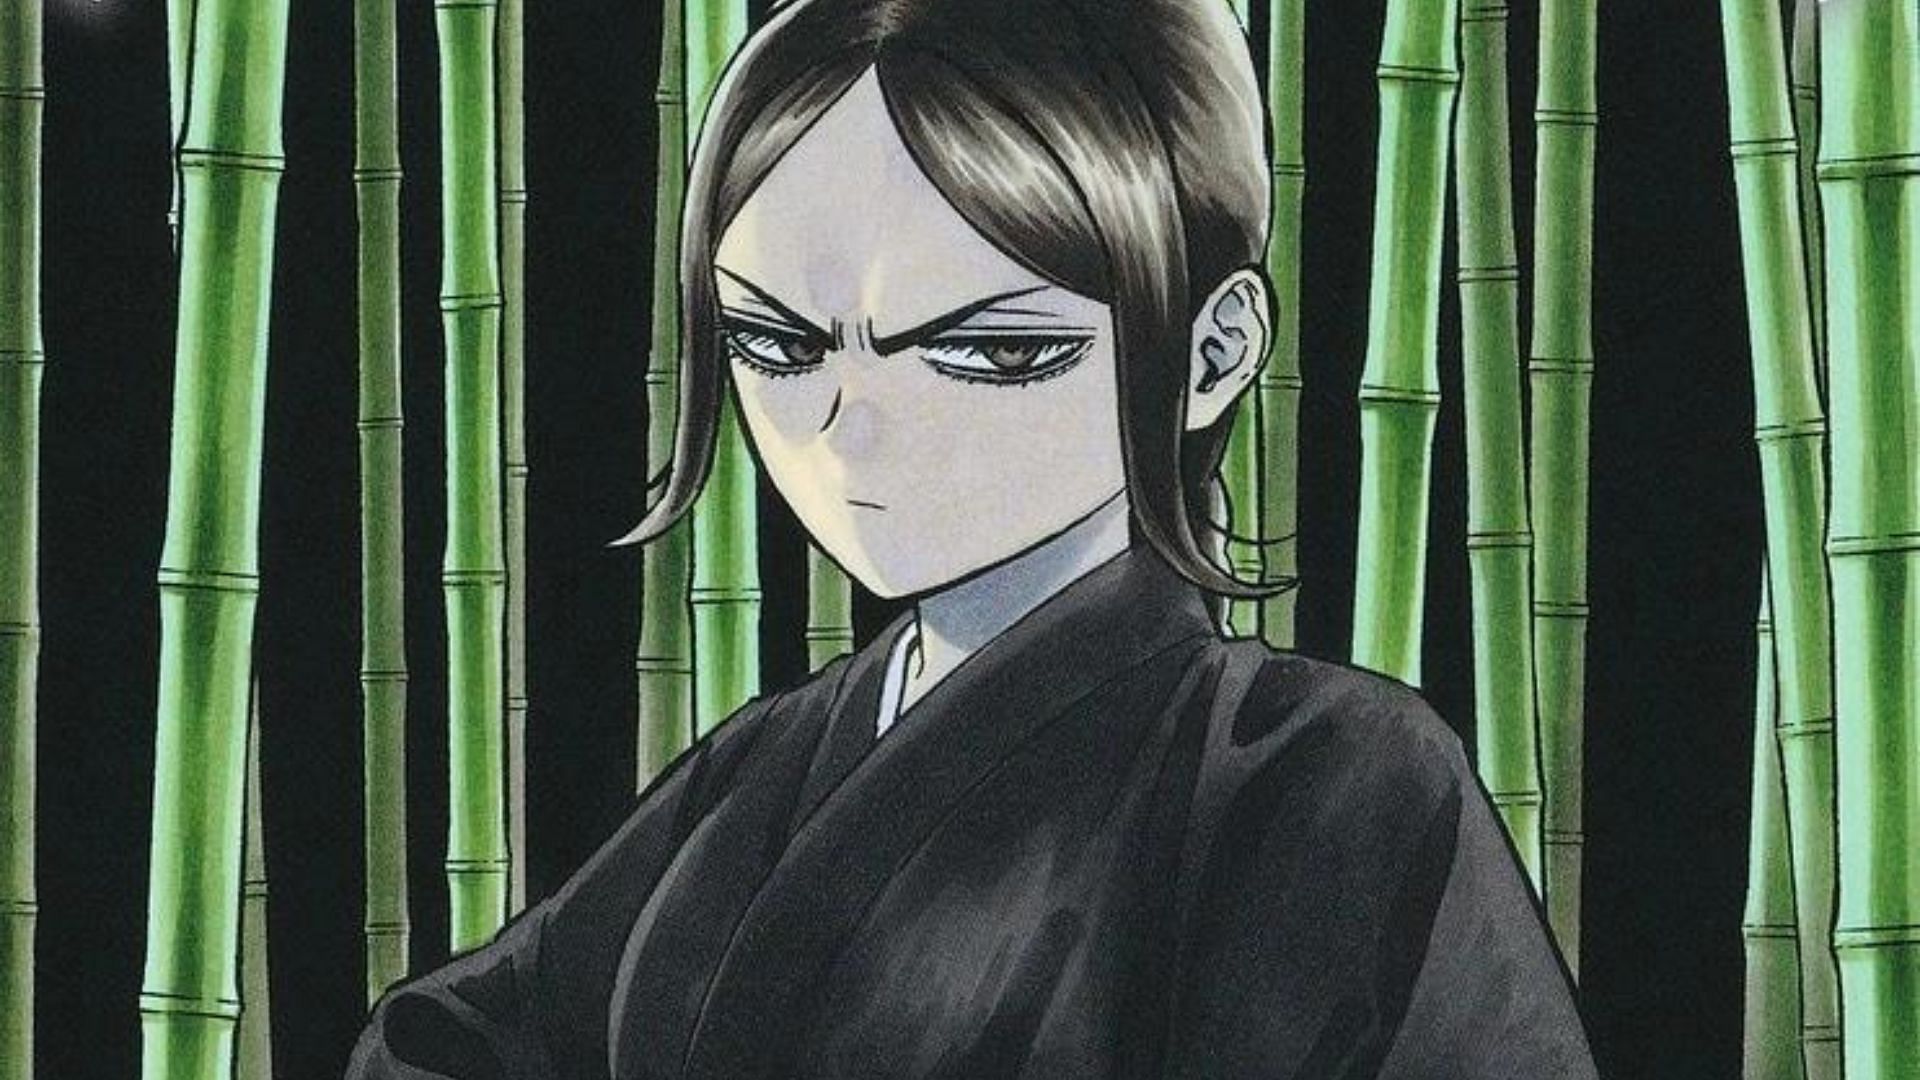 Ichika Yami as seen in Black Clover (Image via Shueisha)